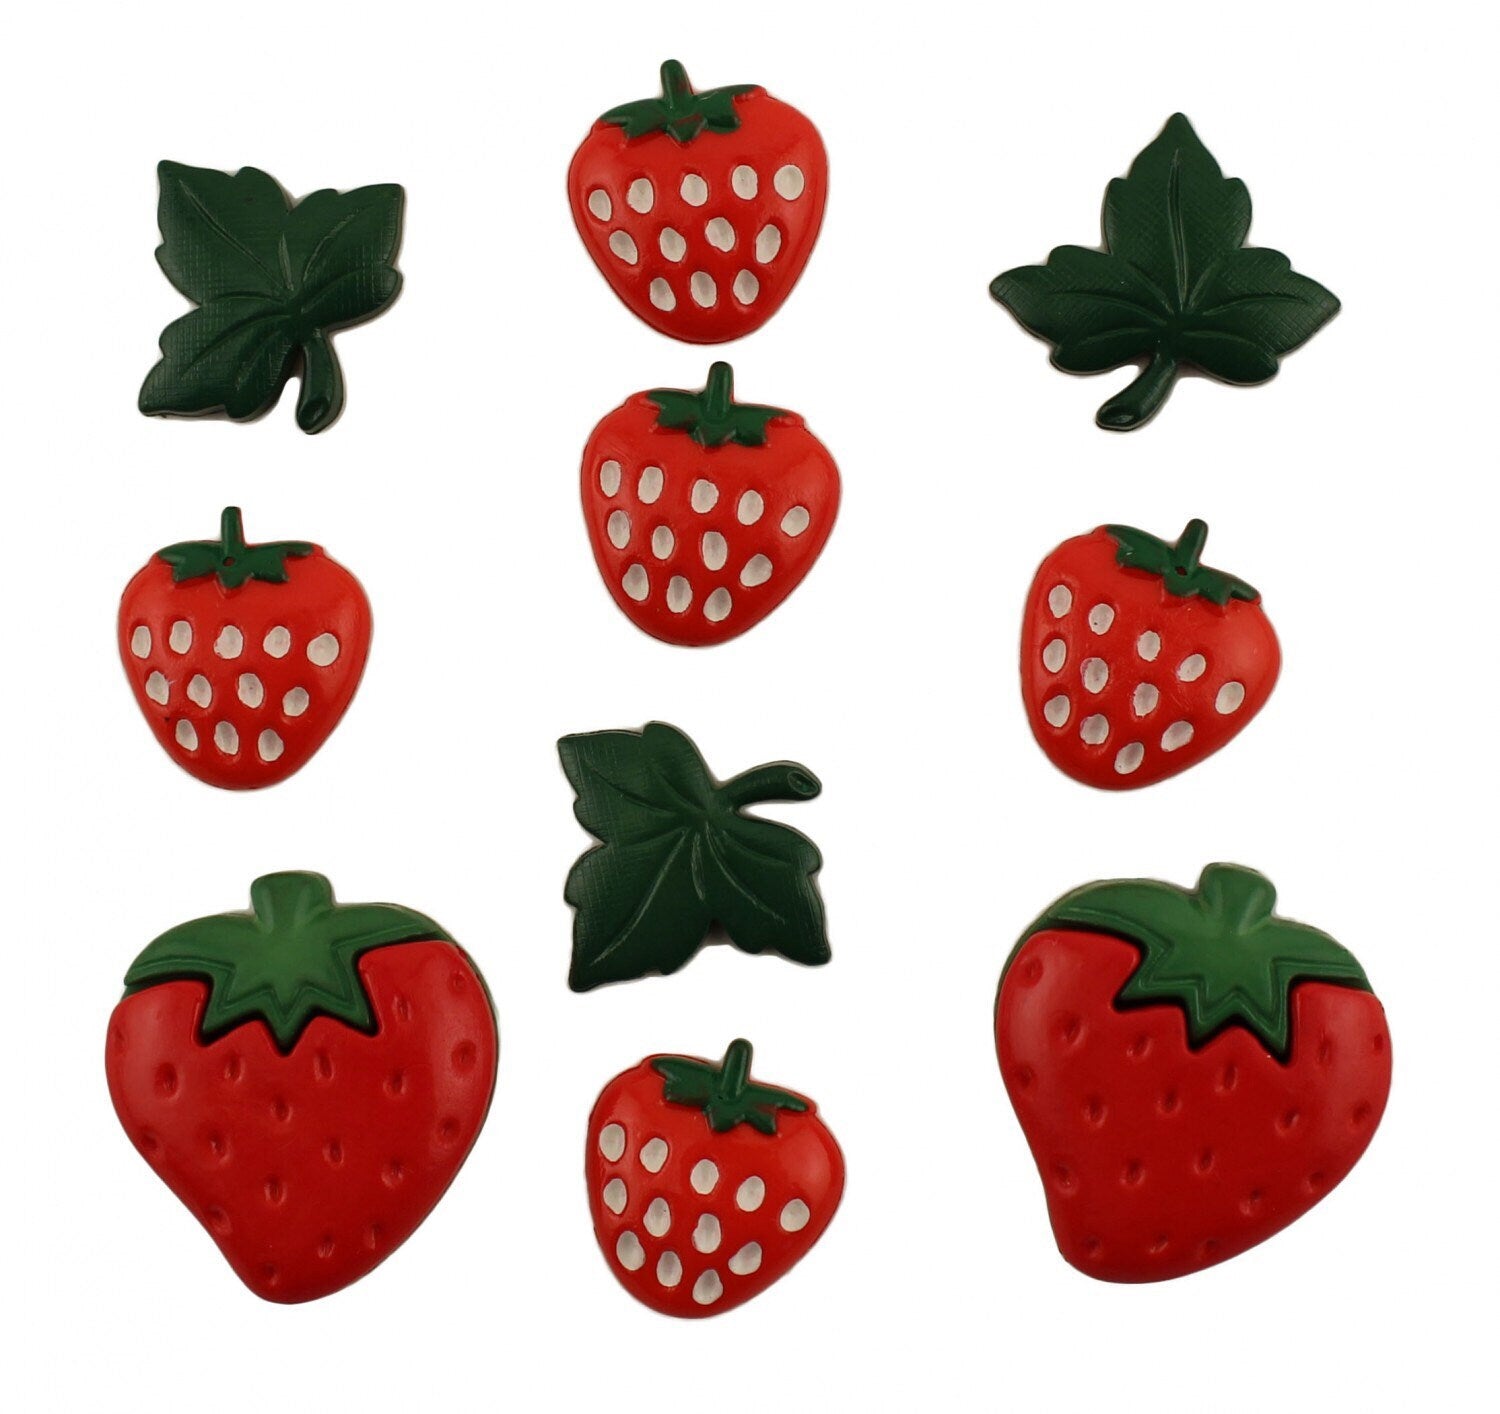 Strawberry Fields - Fruit Buttons - Buttons Galore - 10 buttons/card